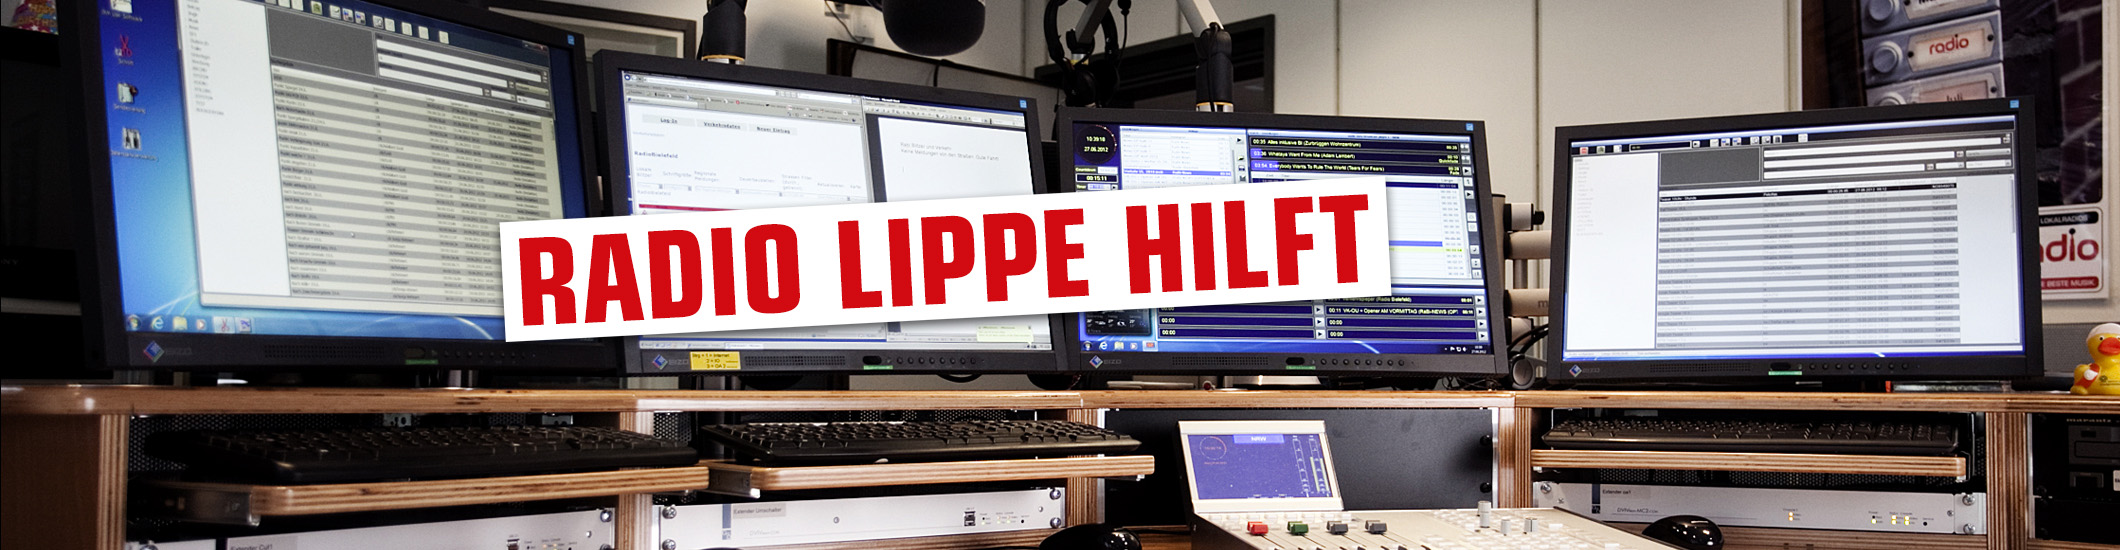 Radio Lippe Hilft